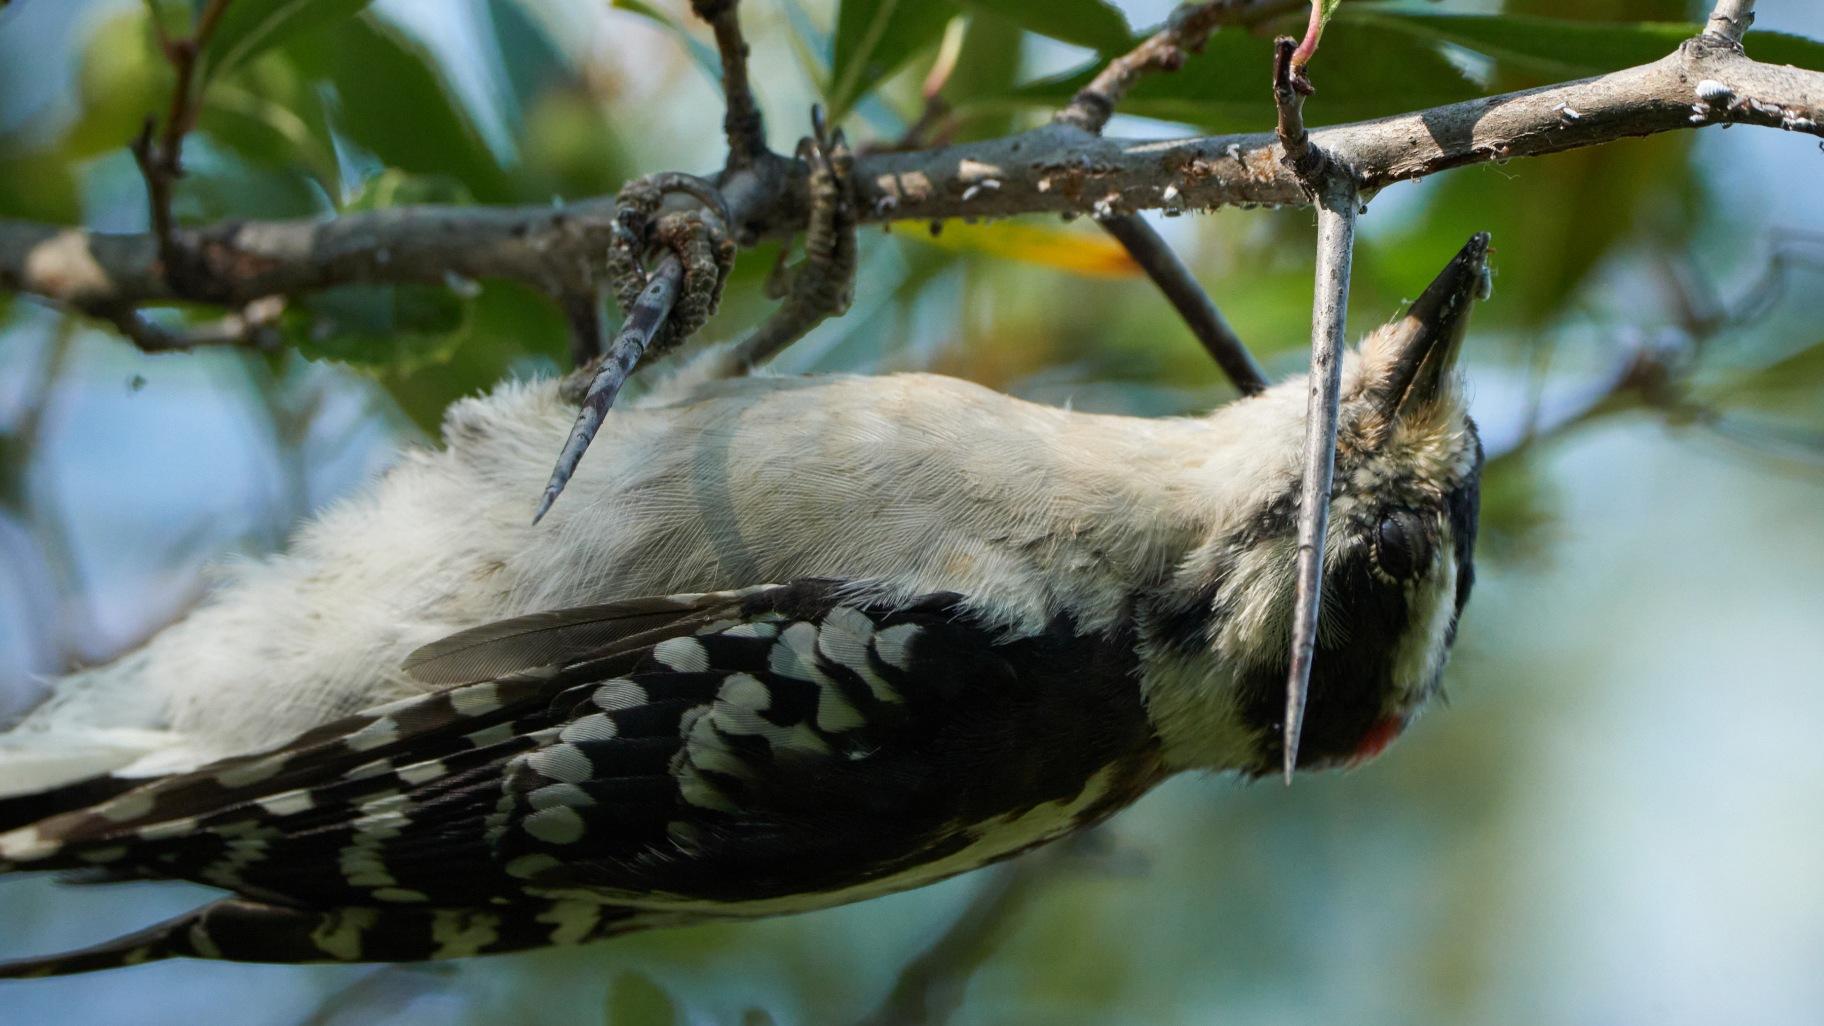 A downy woodpecker turns upside down. (Credit: Jorge Garcia)